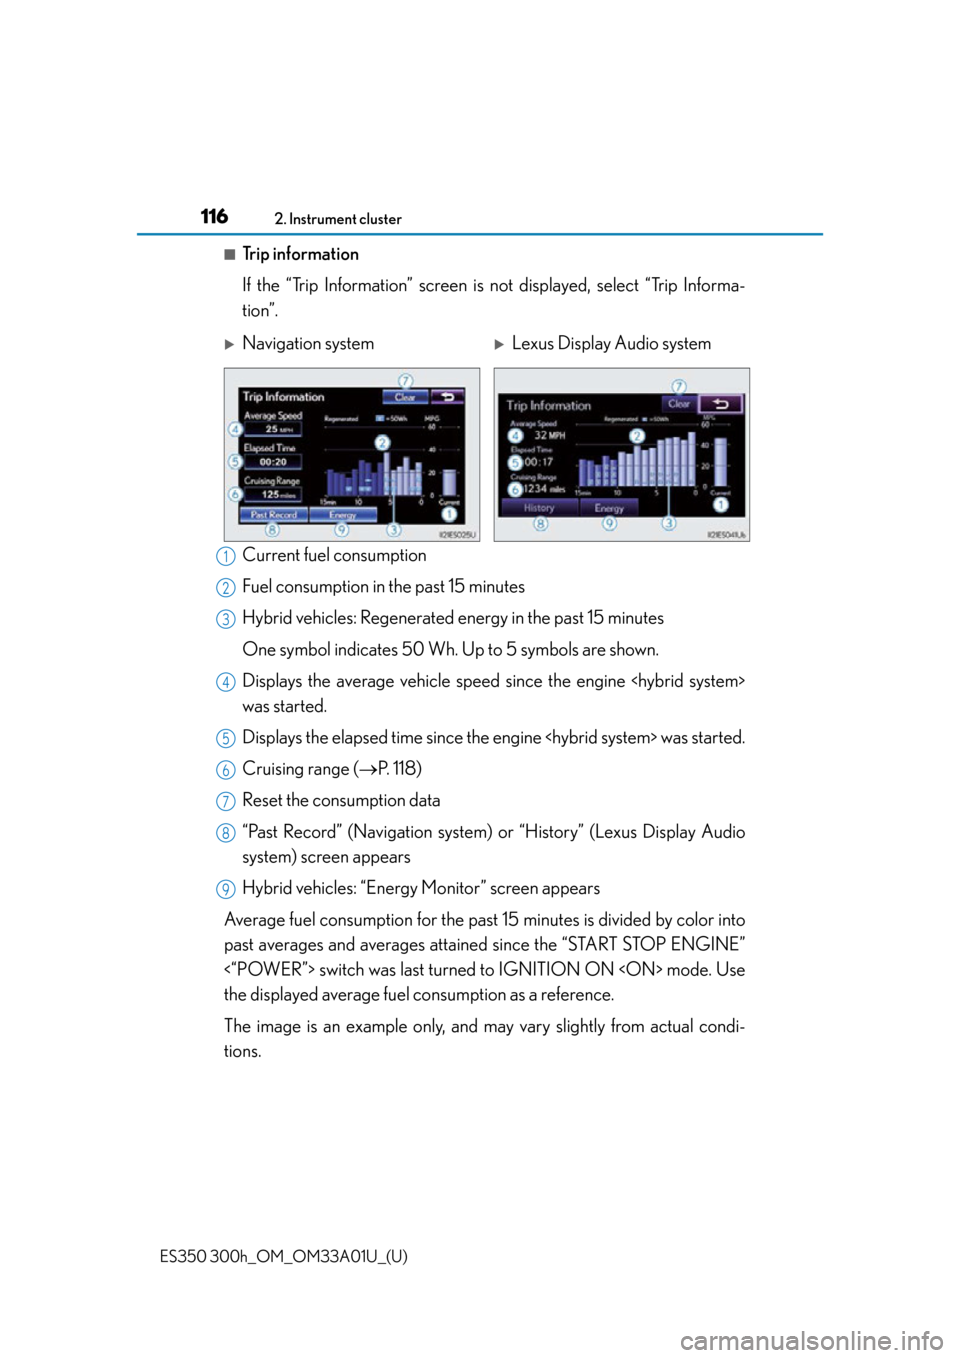 Lexus ES300h 2013  2013-2015 ES350/300h TVIP V4 Remote Engine Starter (RES) Owners / Owners Manual (OM33A01U) 116
ES350 300h_OM_OM33A01U_(U)
2. Instrument cluster
■Trip information
If the “Trip Information” screen is not displayed, select “Trip Informa-
tion”.
Current fuel consumption
Fuel consumpti